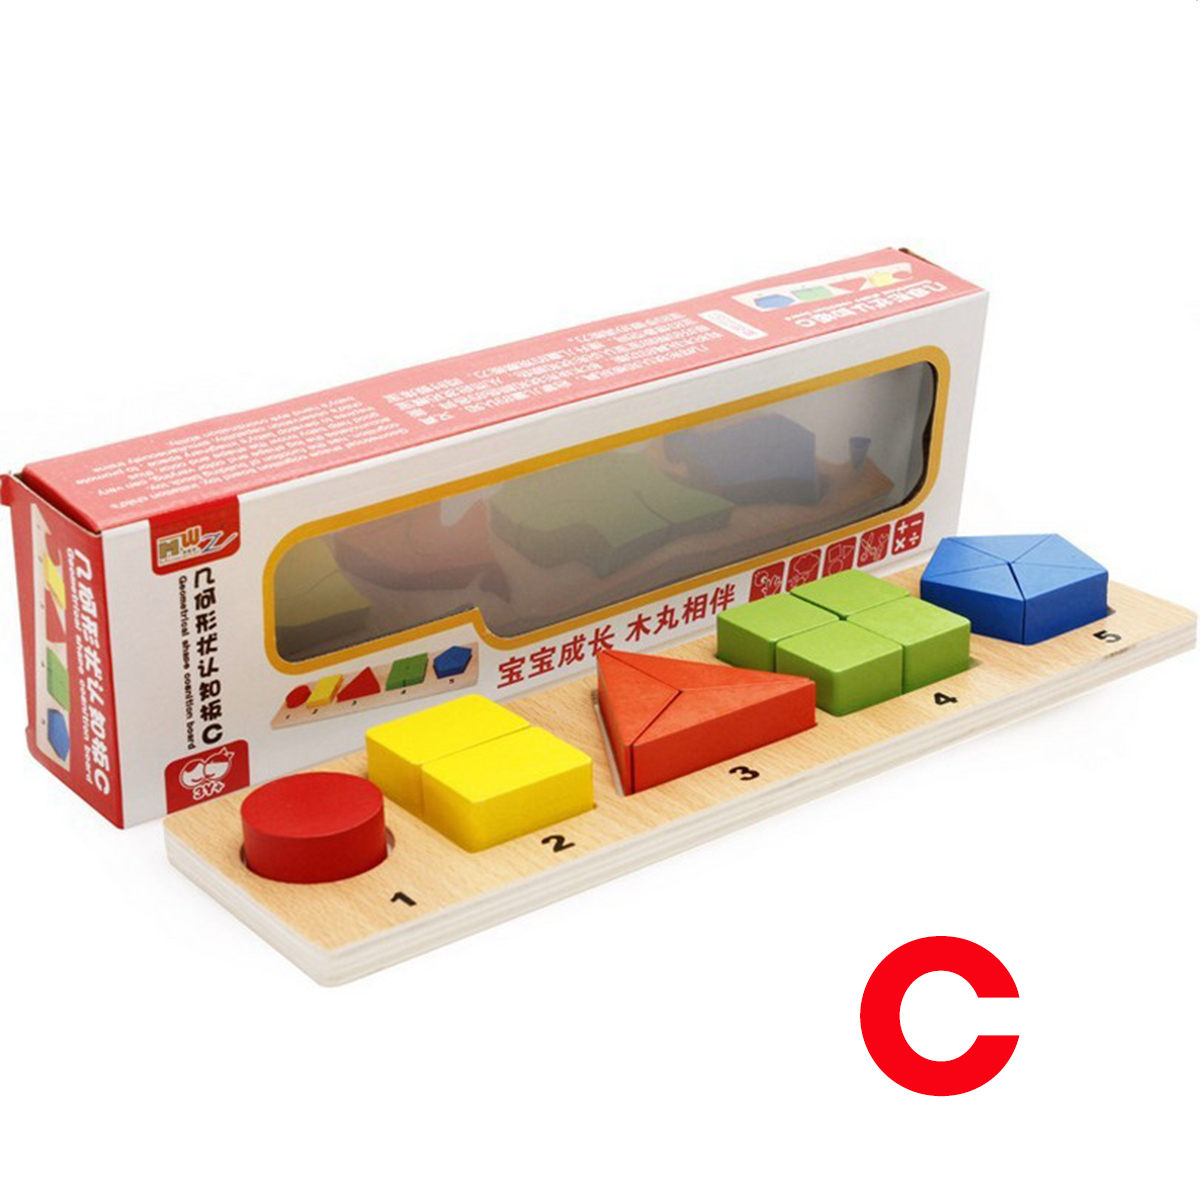 Wooden-Geometric-Matching-Blocks-Kids-Baby-Educational-Toys-Inlay-Building-Block-Teaching-Aid-Toy-Gi-1594036-9